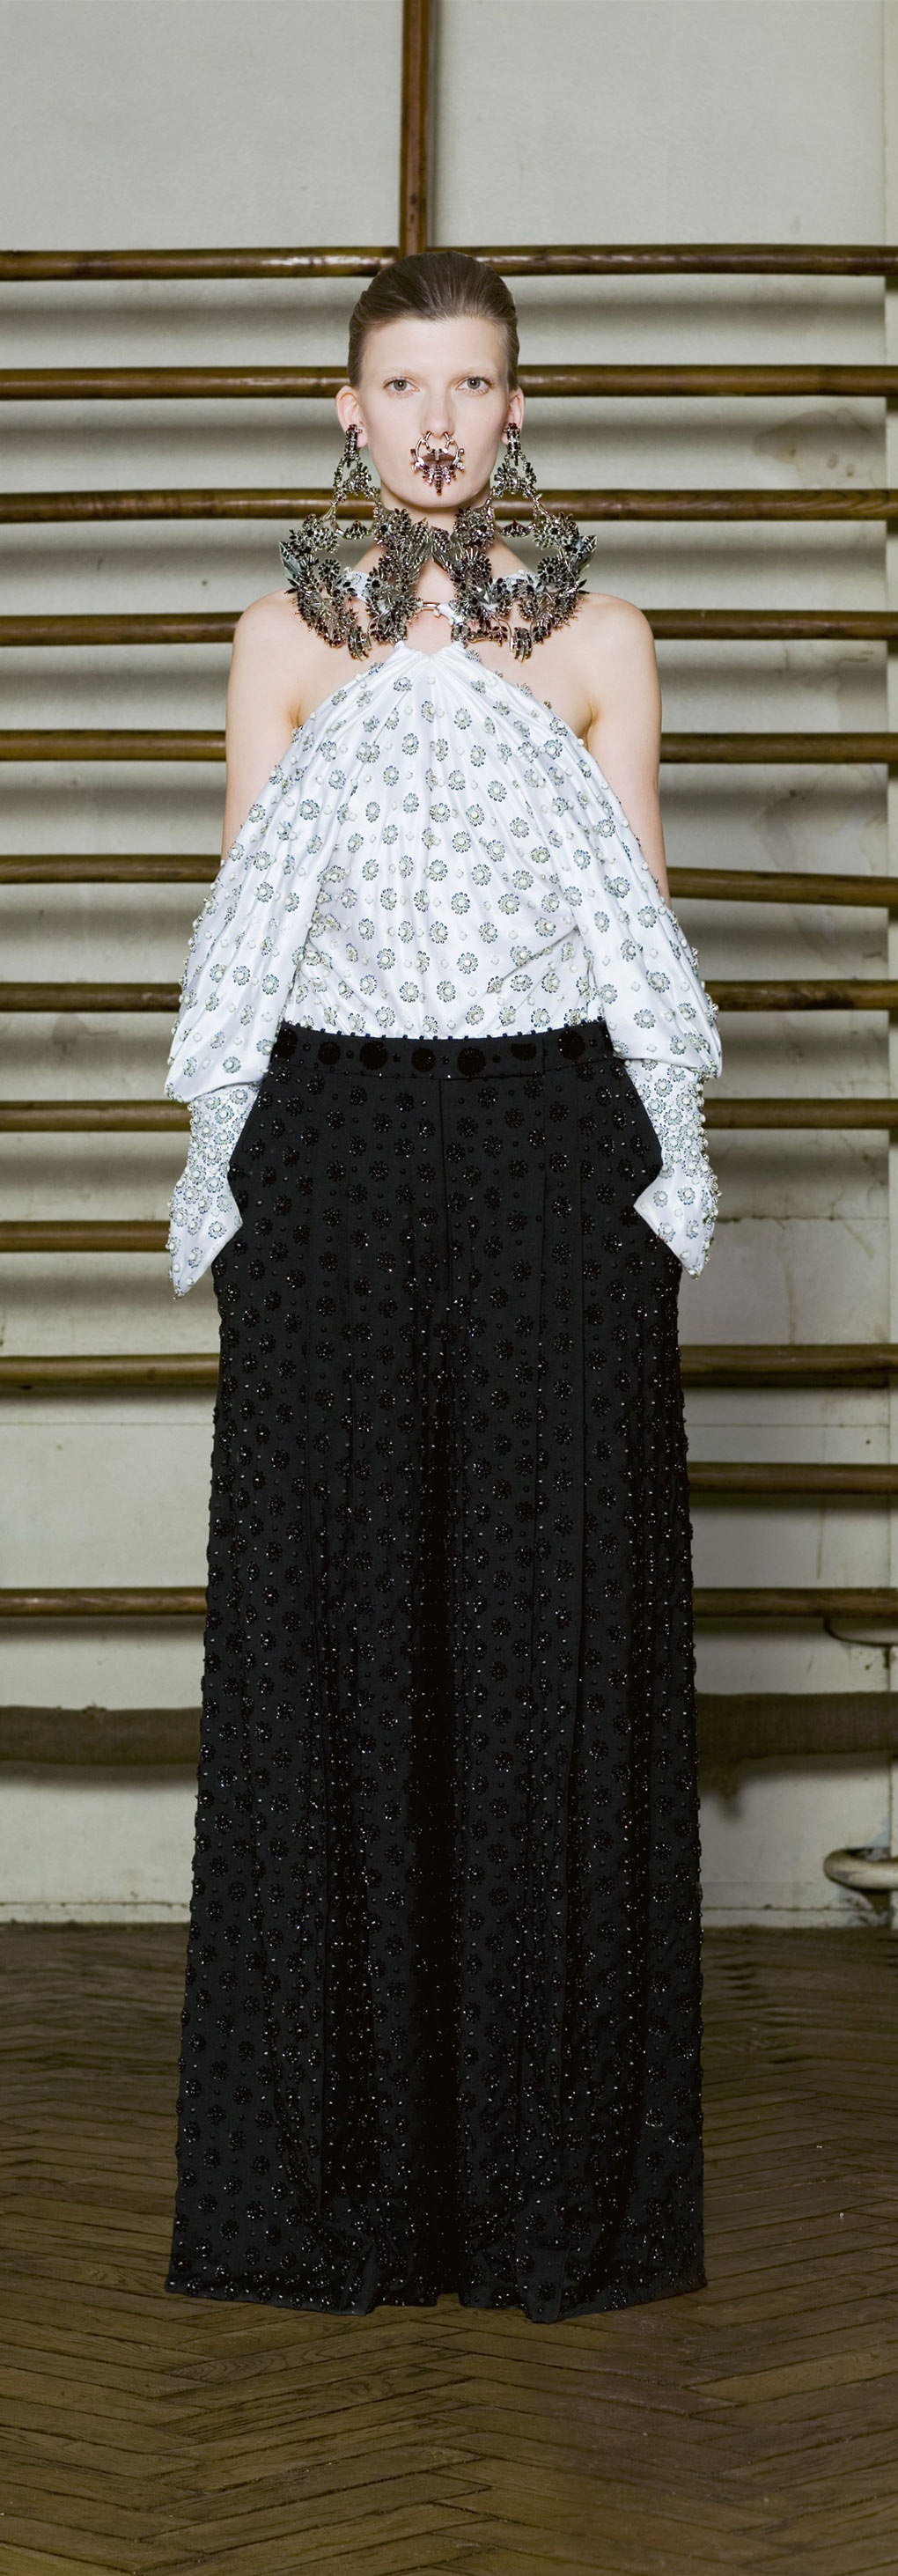 Givenchy Haute Couture spring 2012 Riccardo Tisci